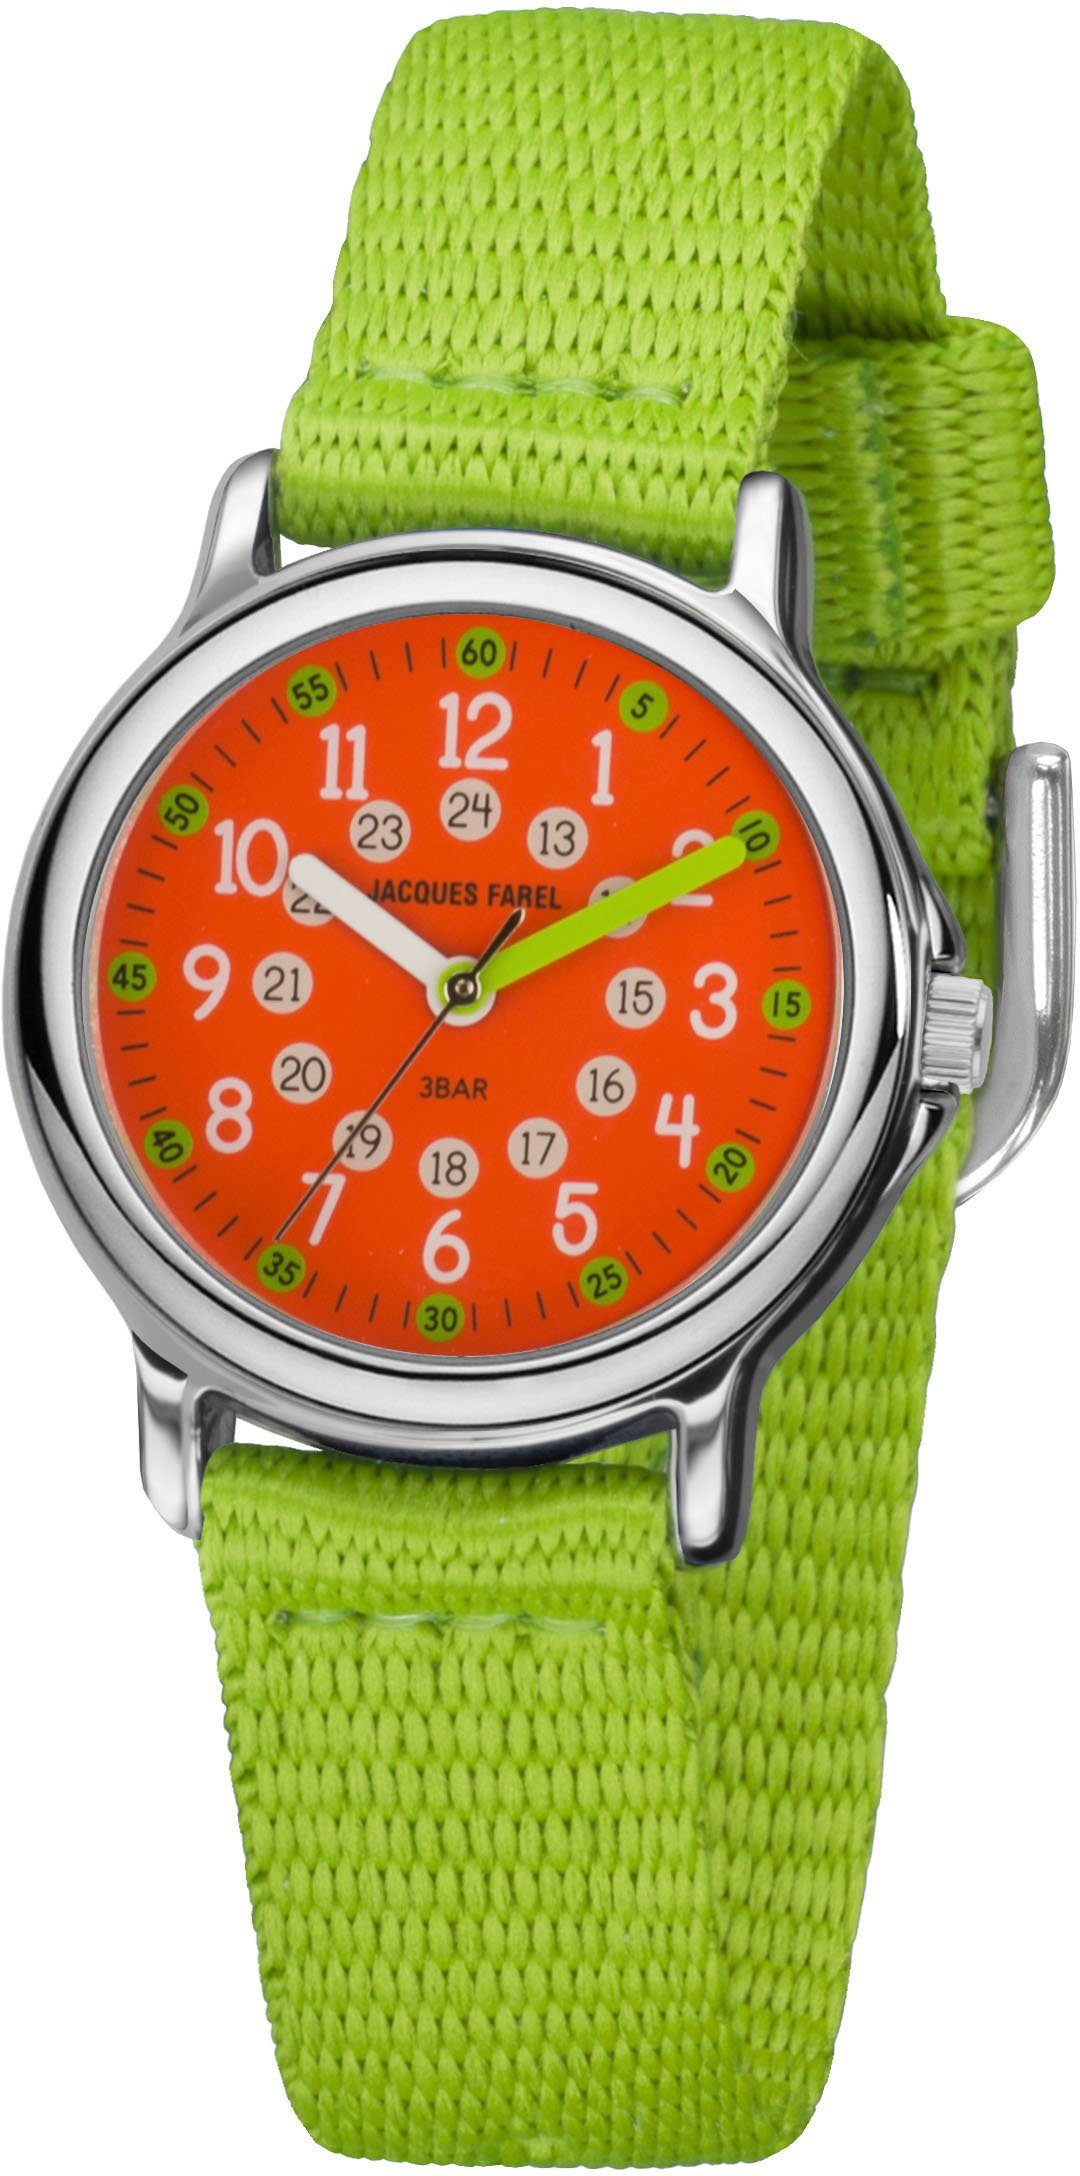 Jacques Farel Quarzuhr KCF 090, Armbanduhr, Kinderuhr, Mädchenuhr, ideal auch als Geschenk